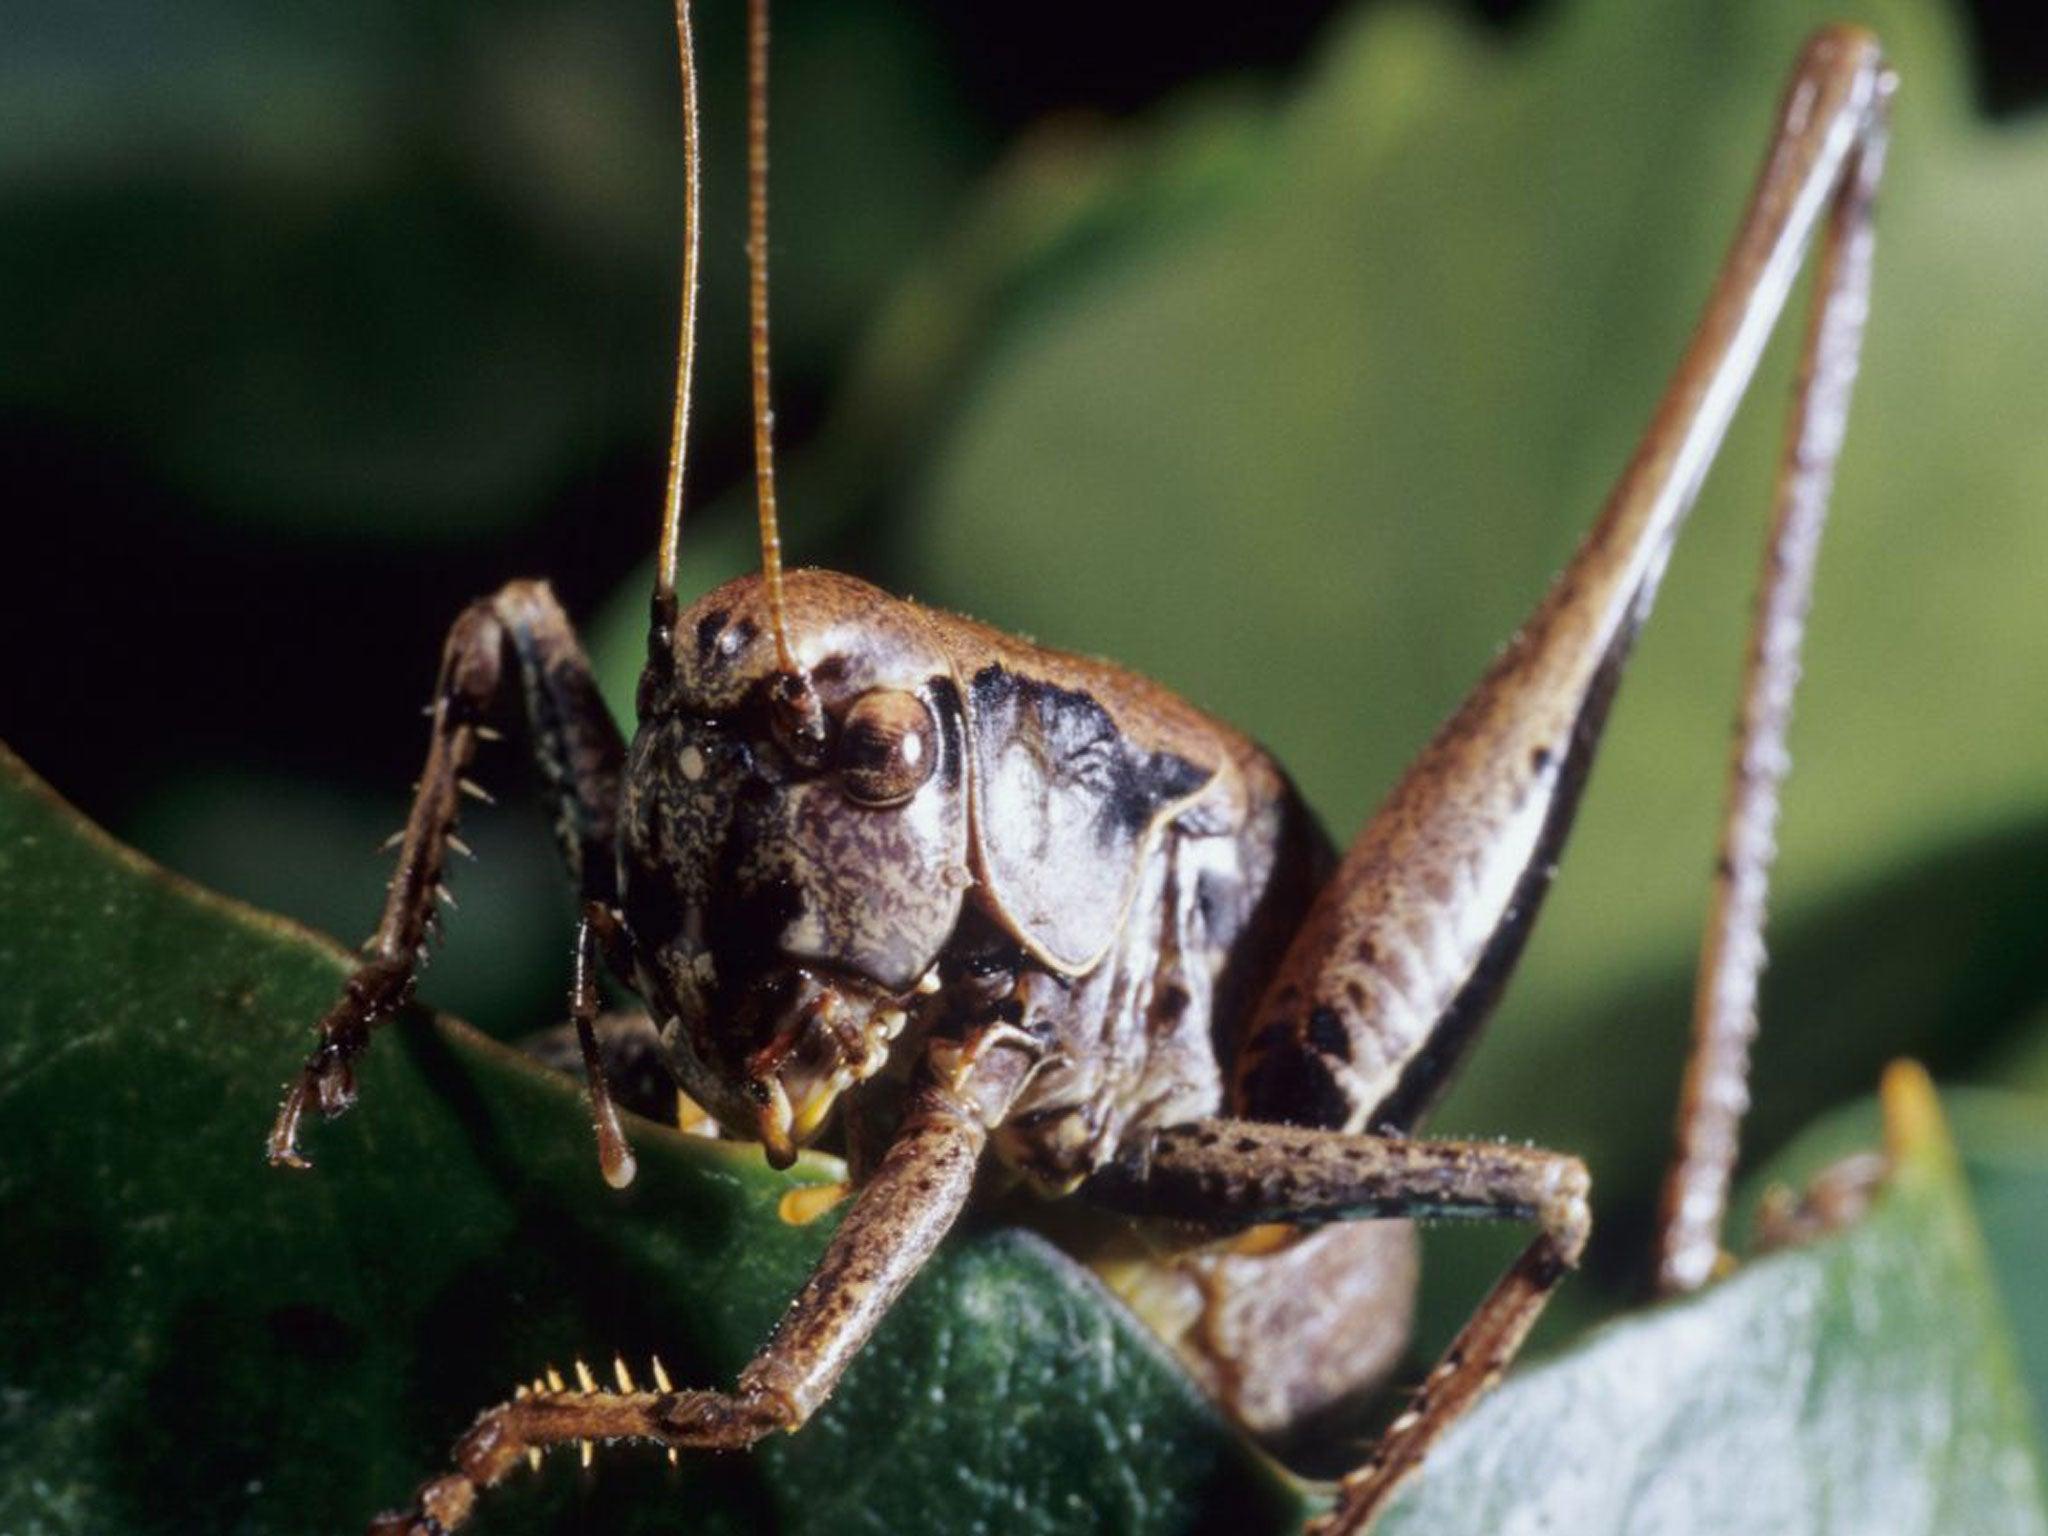 Nature Studies: Why Keats's hedge cricket no longer chirrups